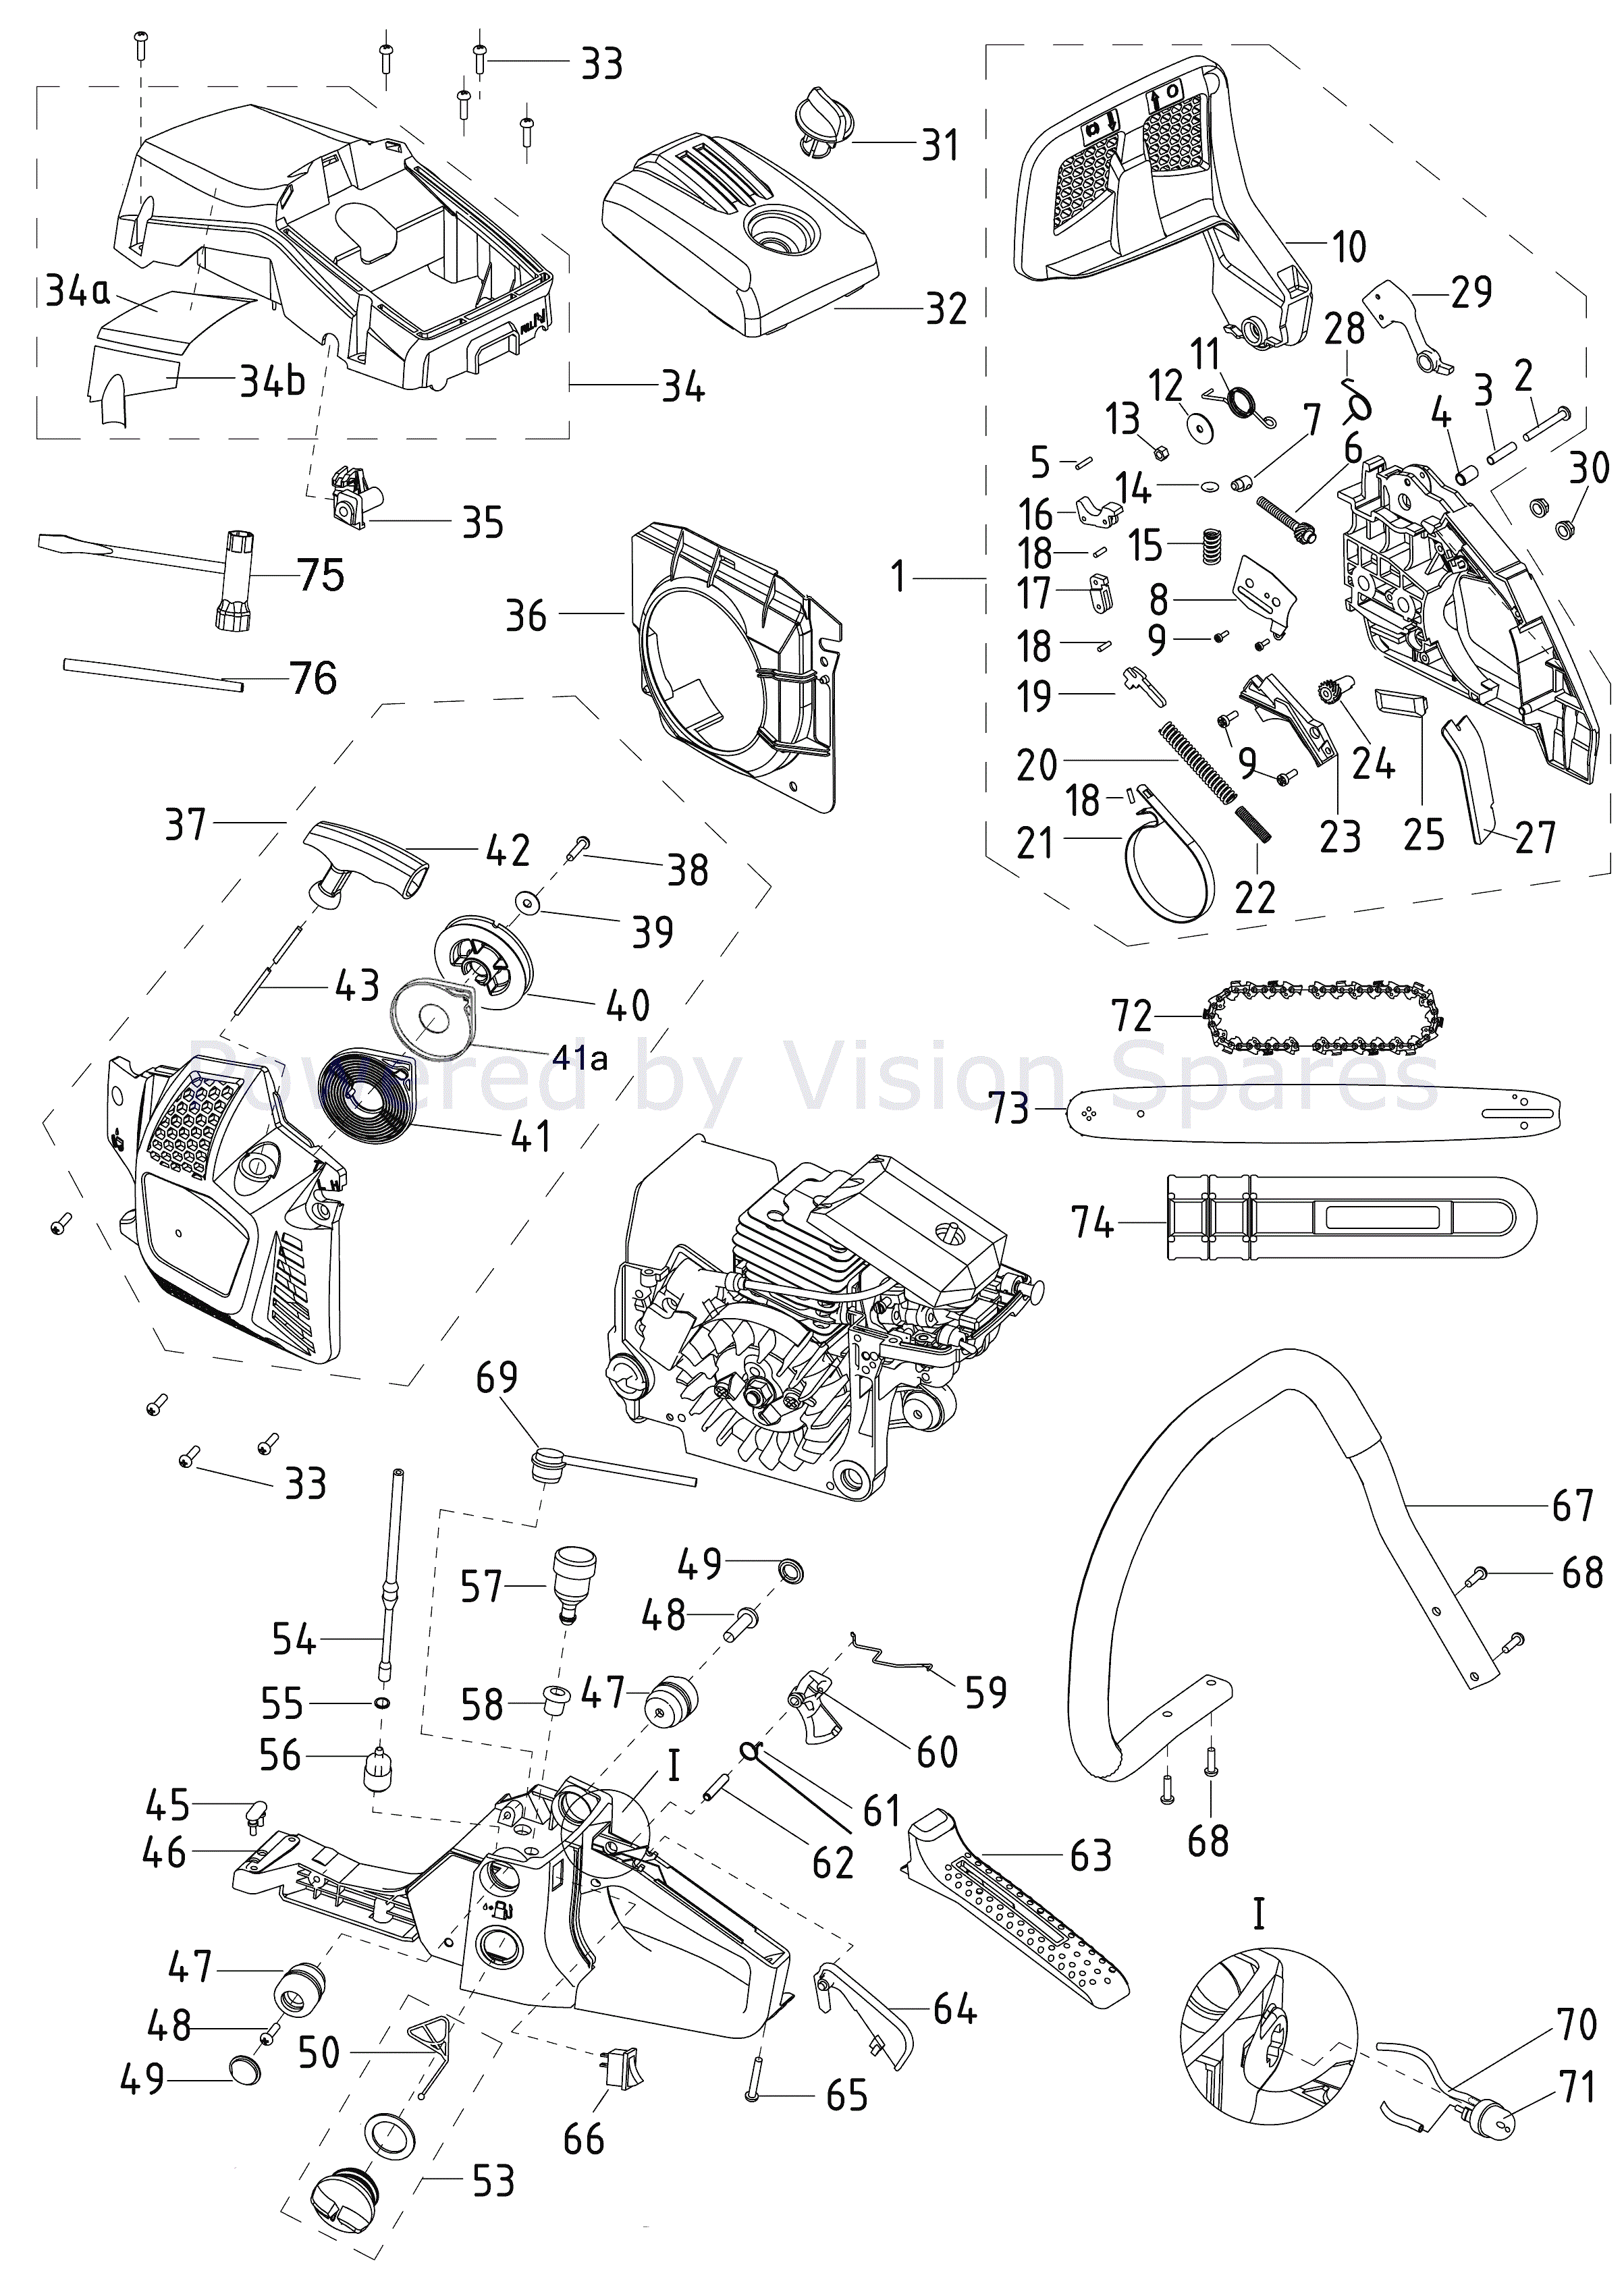 Mitox 56CS-PRO Chainsaw (56CS-PRO Chainsaw) Parts Diagram, BODY